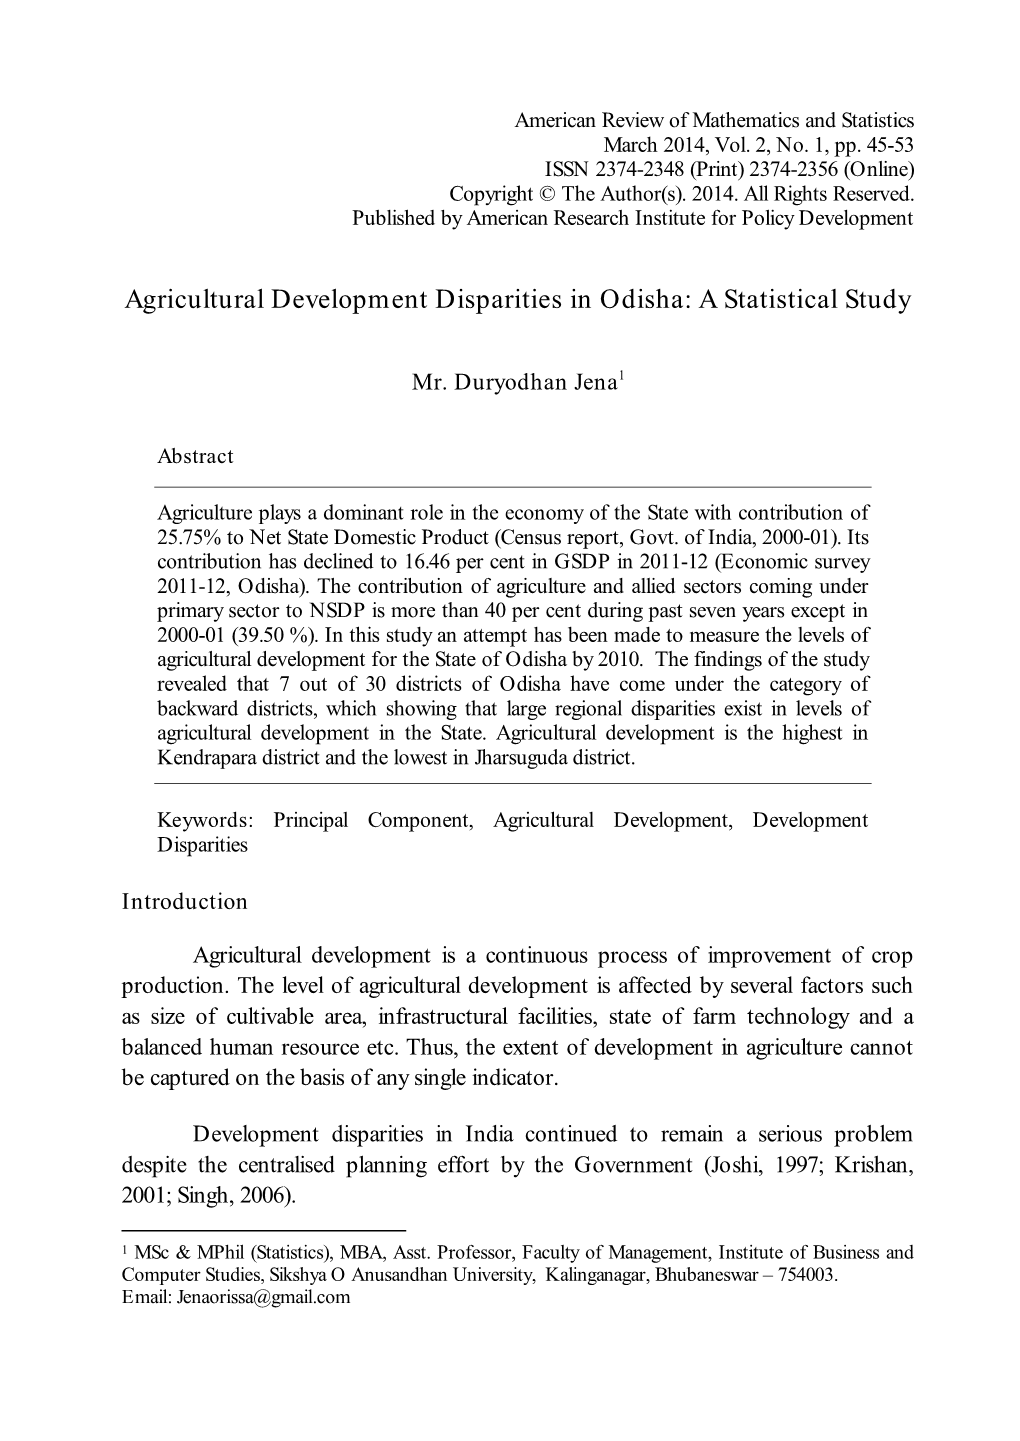 Agricultural Development Disparities in Odisha: a Statistical Study